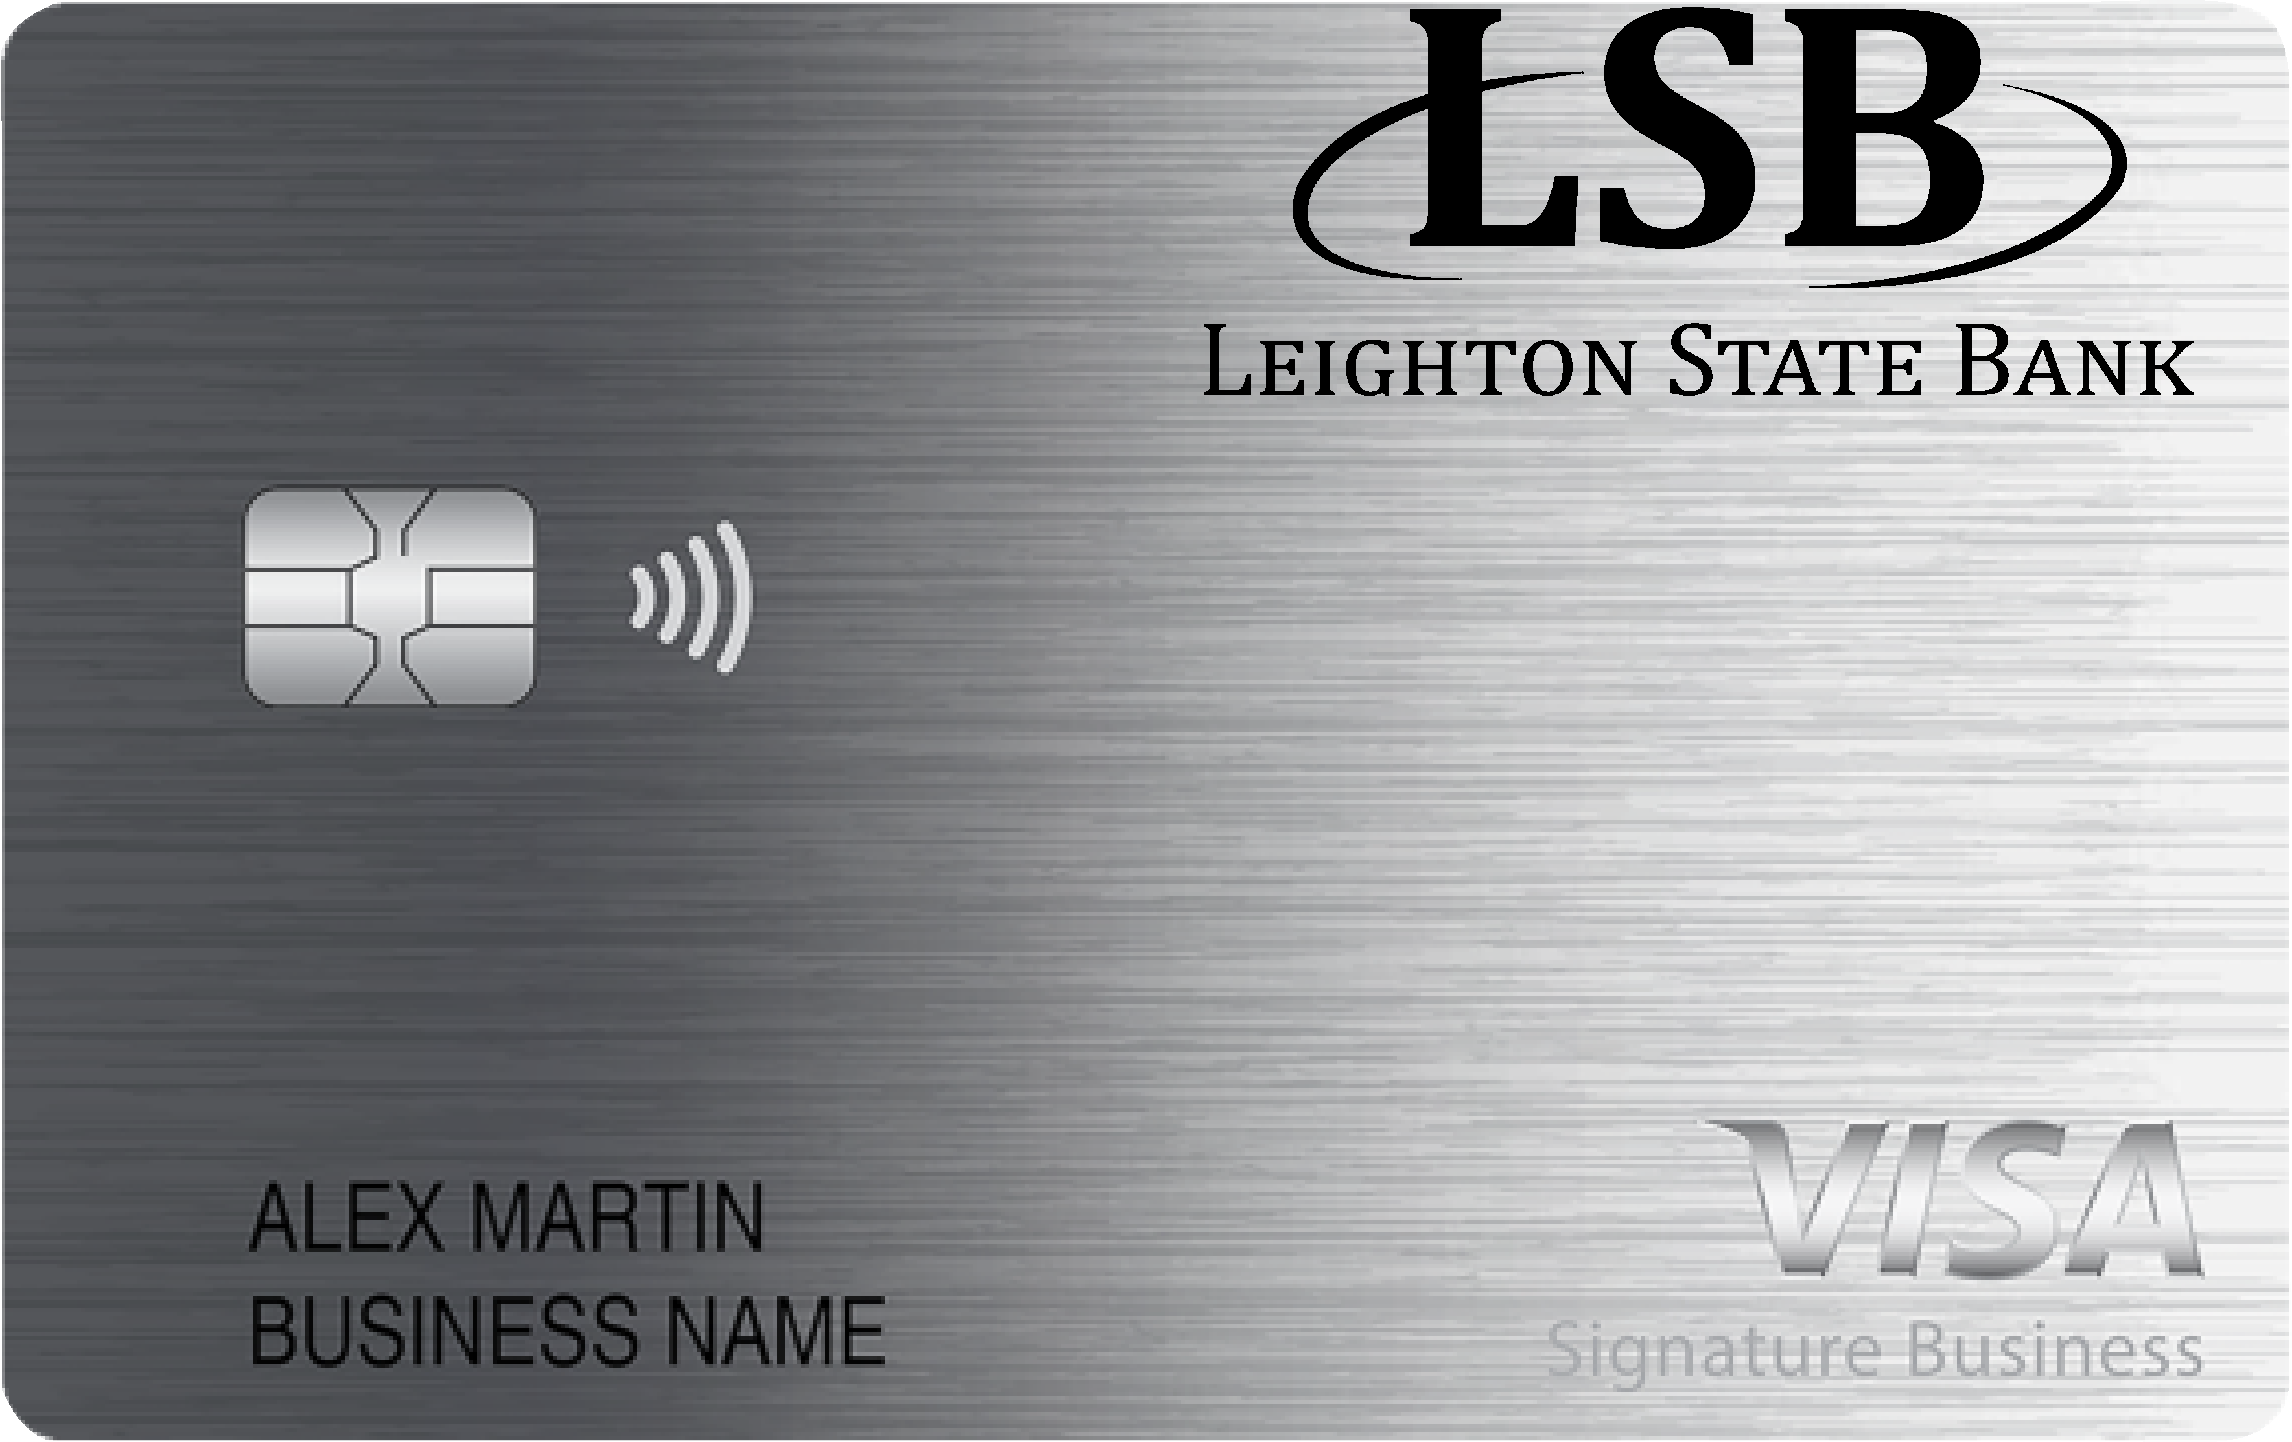 Leighton State Bank Smart Business Rewards Card